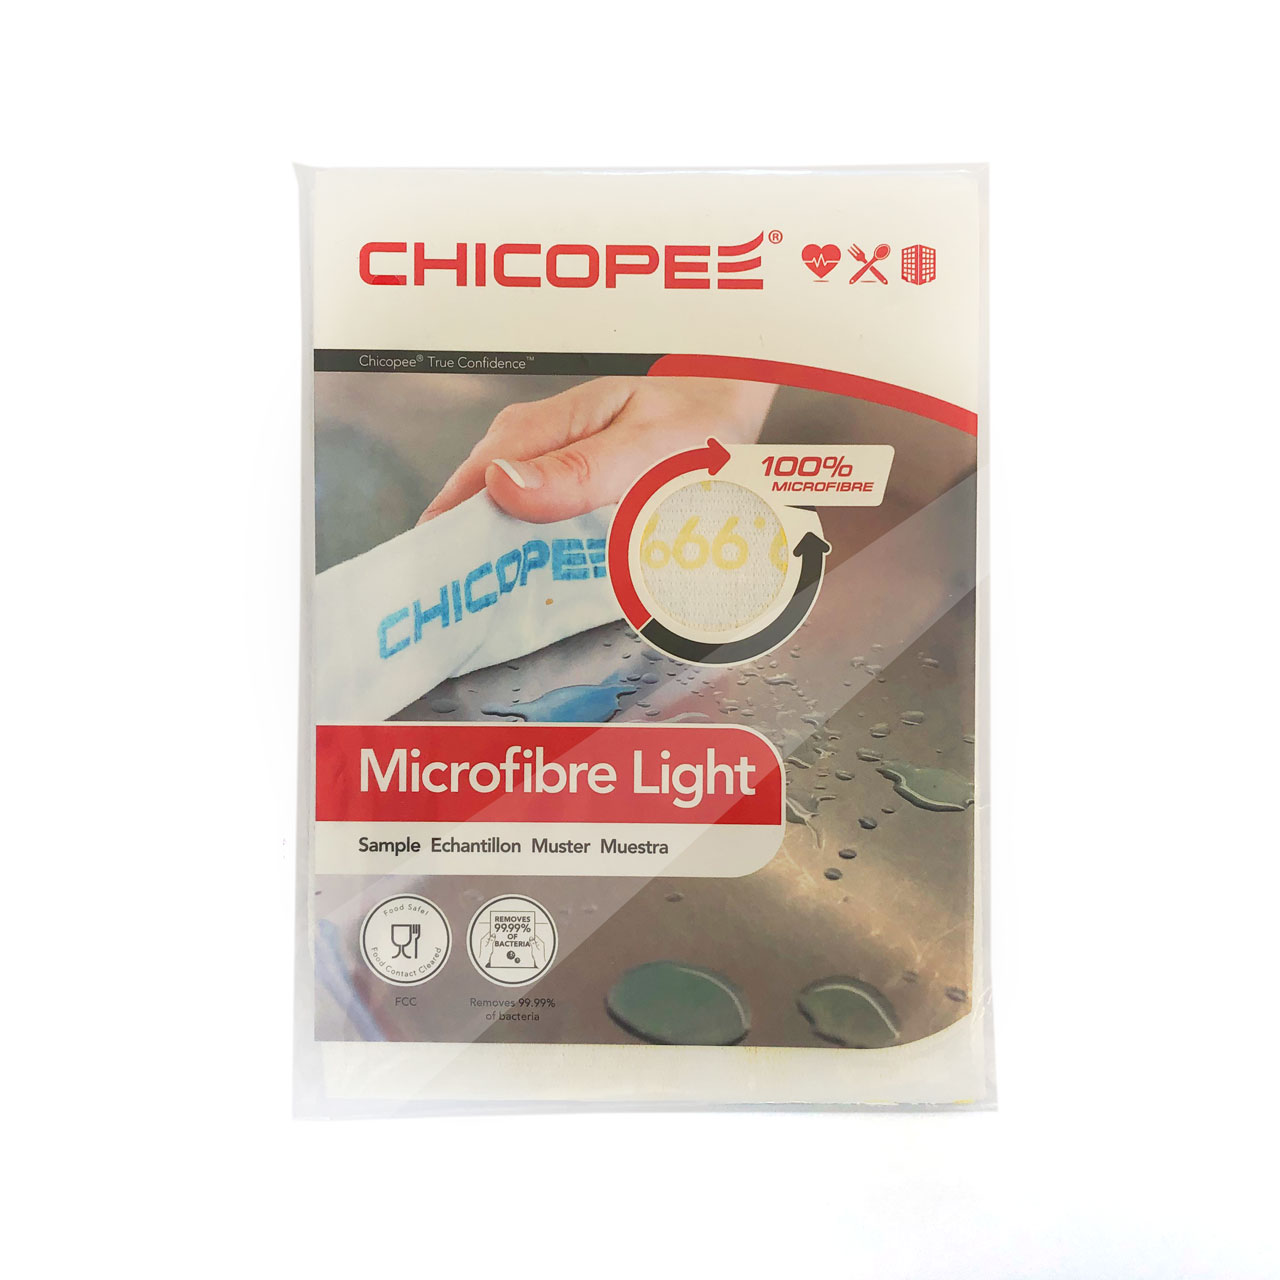 PROMO CHICOPEE® MICROFIBRE LIGHT